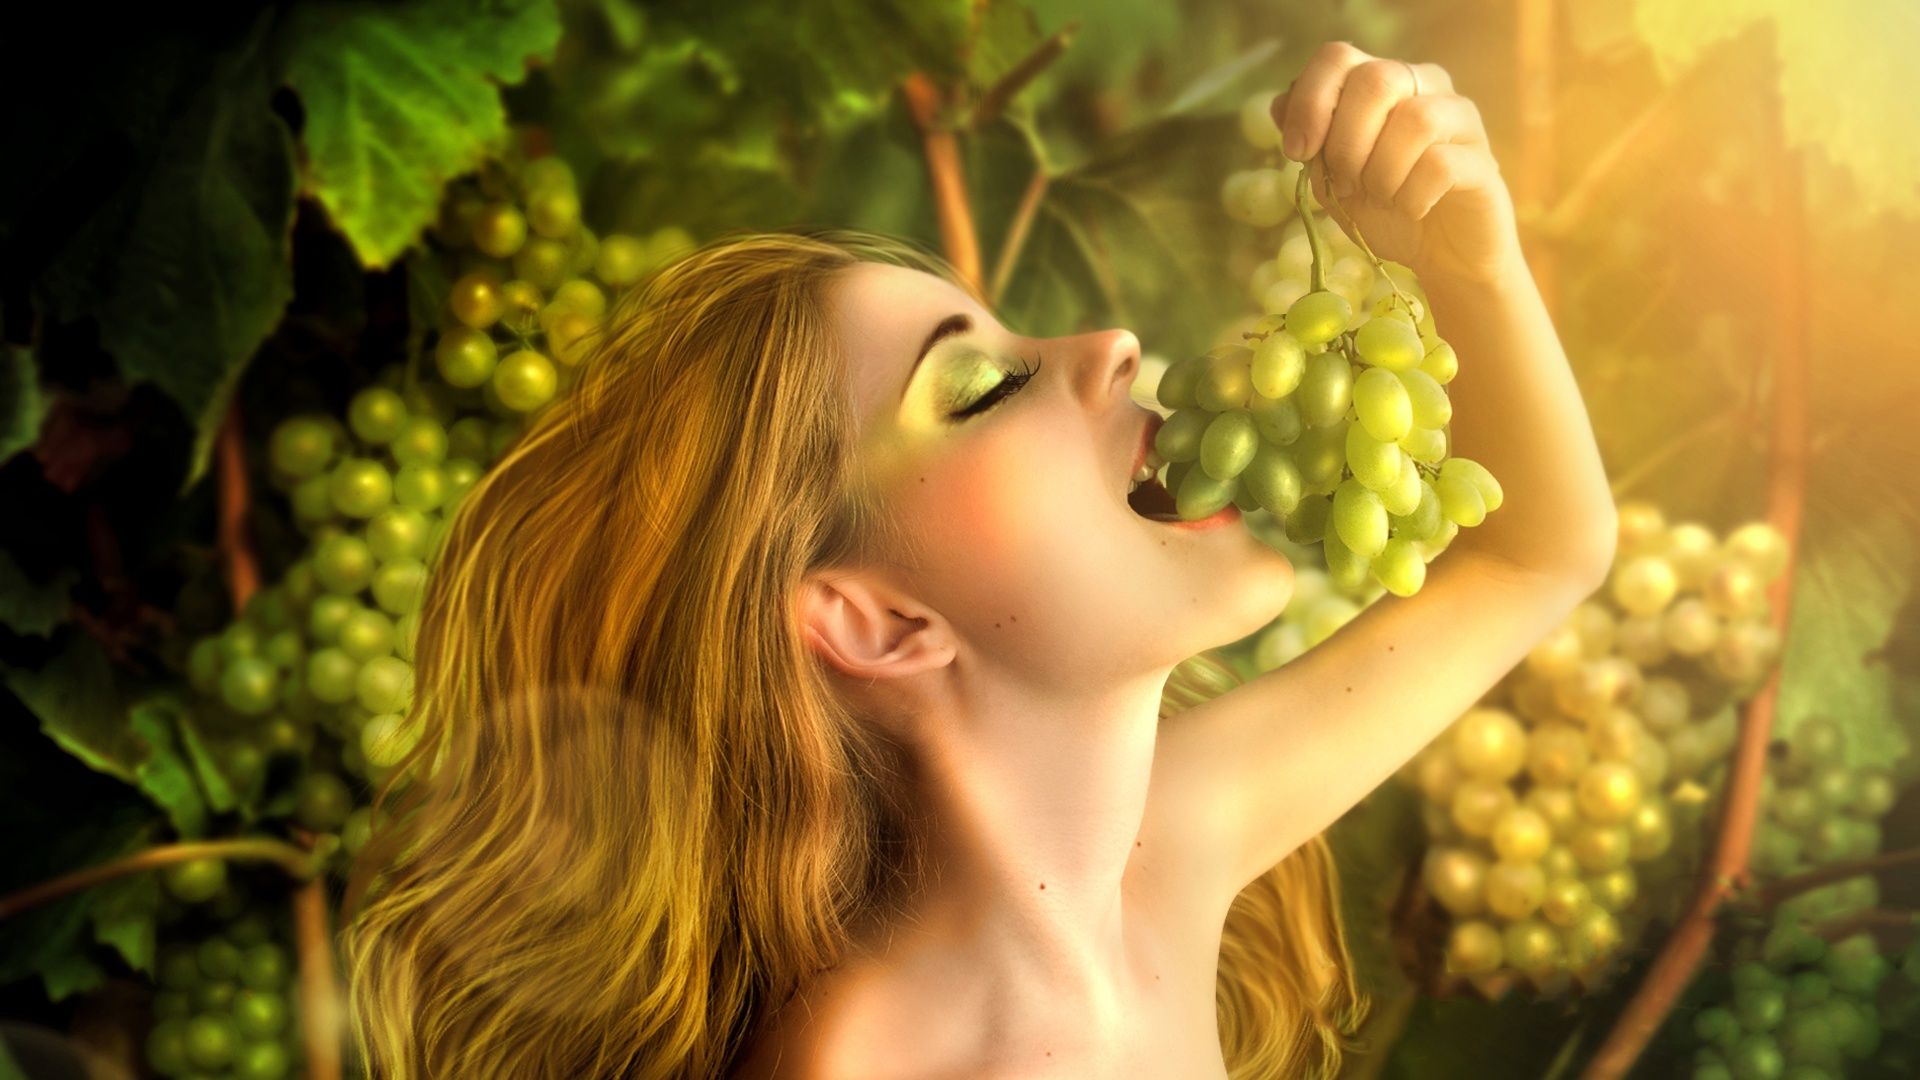 Girl-Green-Grapes.jpg (1920×1080) | green grapes | Pinterest | Green ...